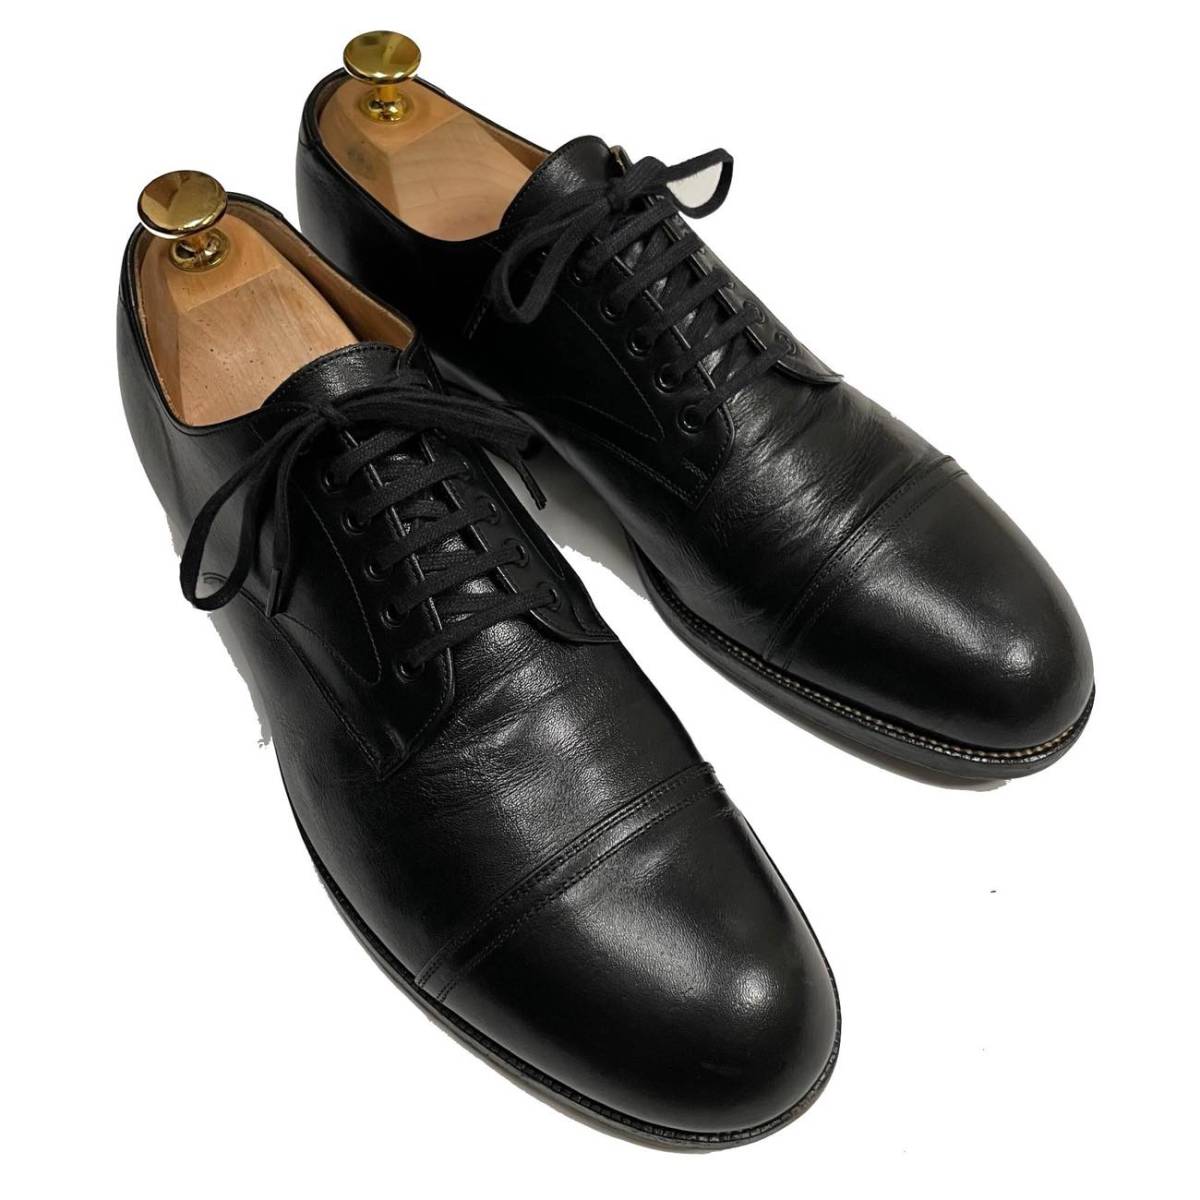 AUTHENTIC SHOE&Co, オフィサーレザーシューズ 短靴 定価88,000円 25.5cm オーセンティックシュー アンドコー メンズ革靴 foot the coacher_画像1